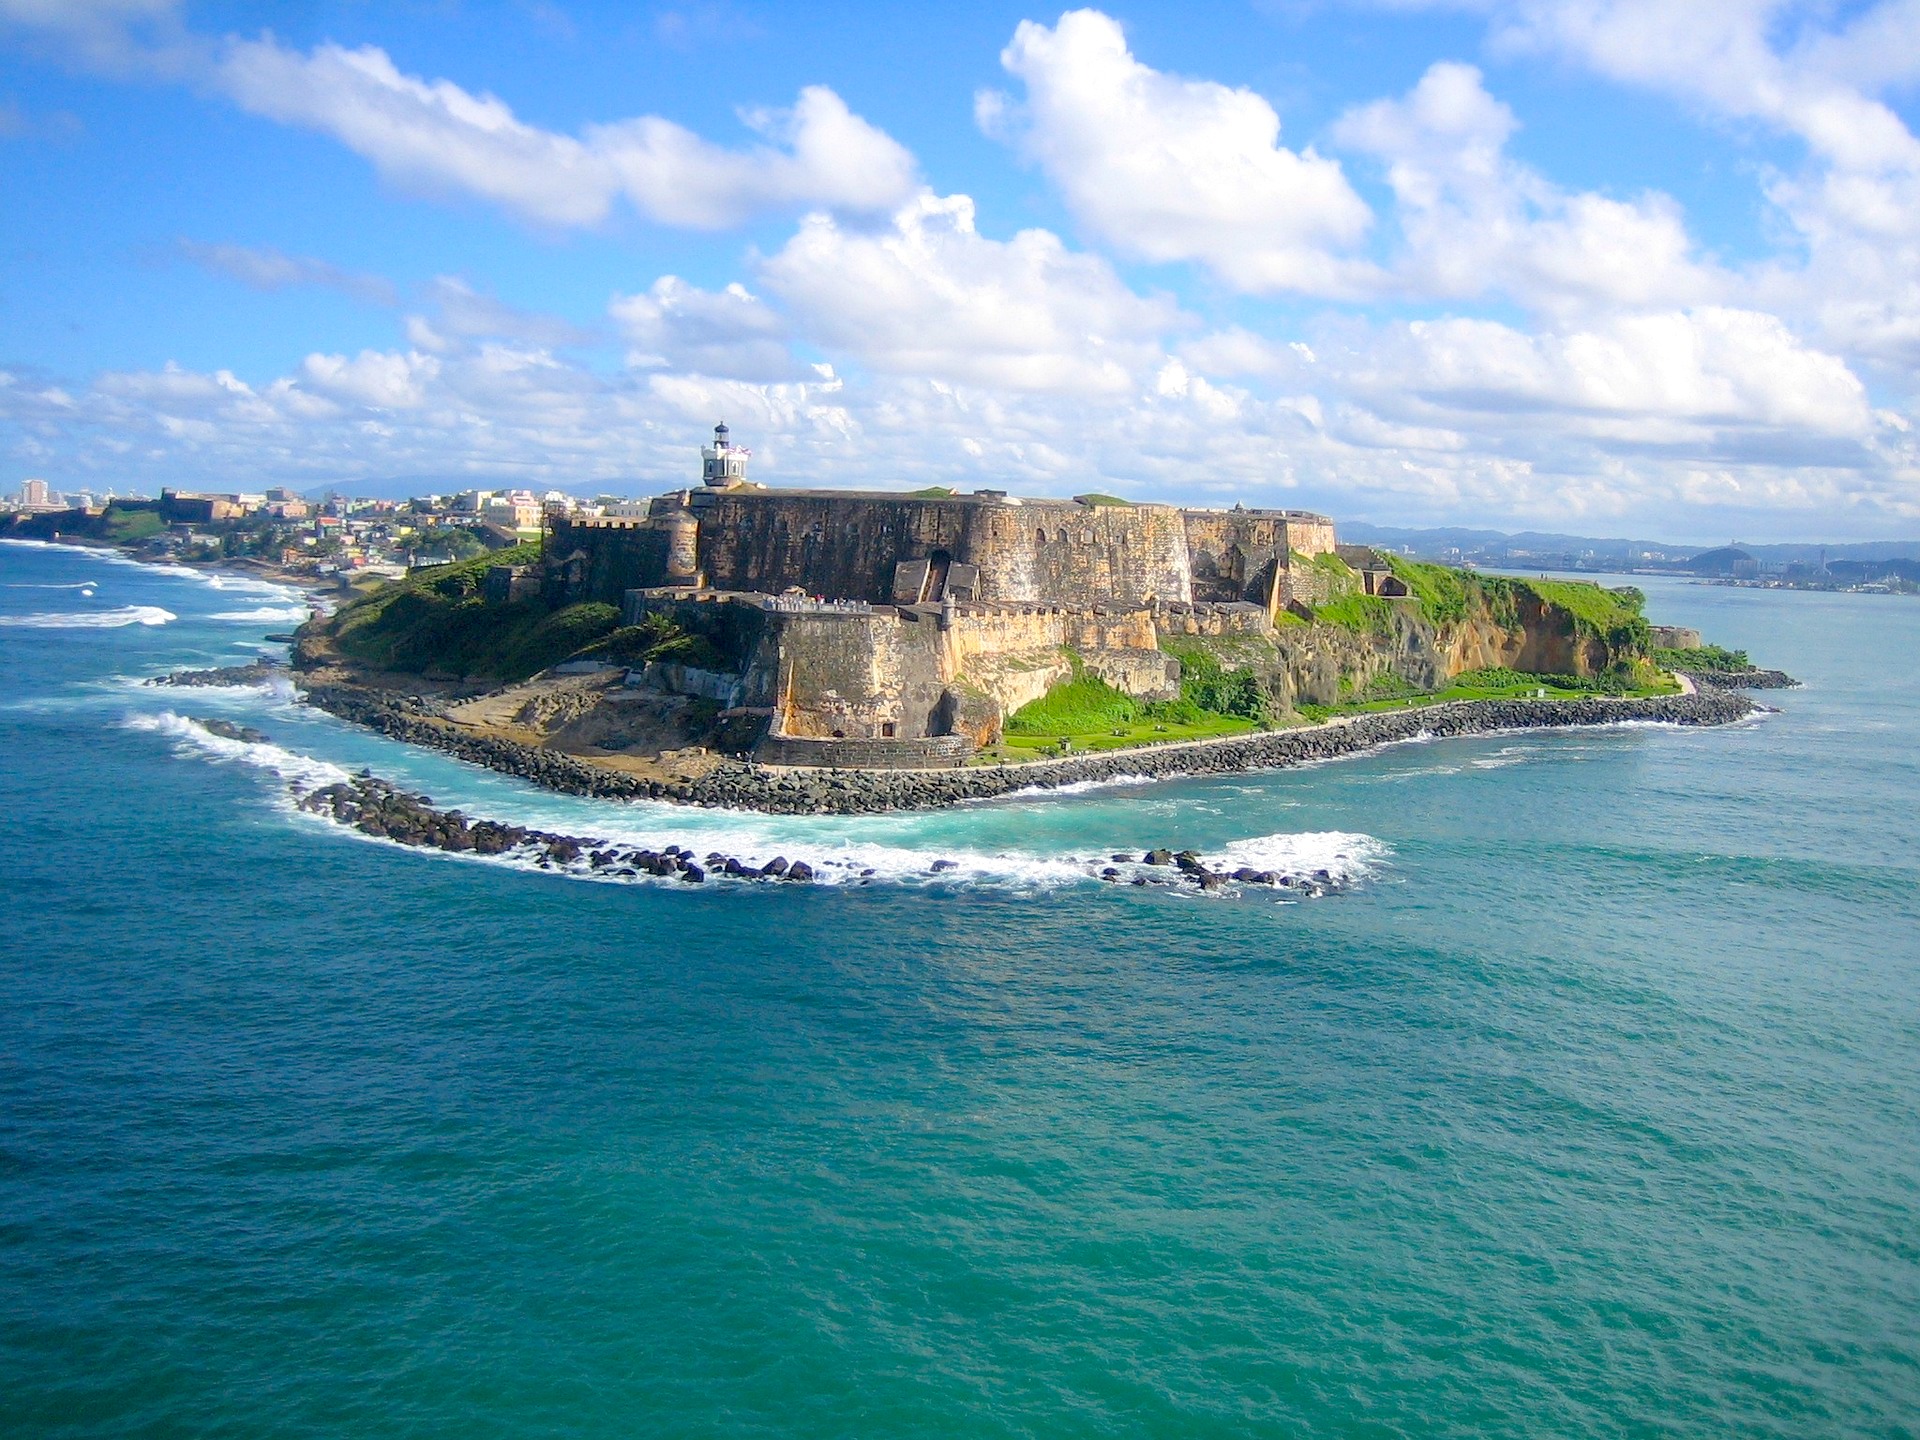 Old San Juan, Puerto Rico (Photo Credit: Beth from Pixabay)